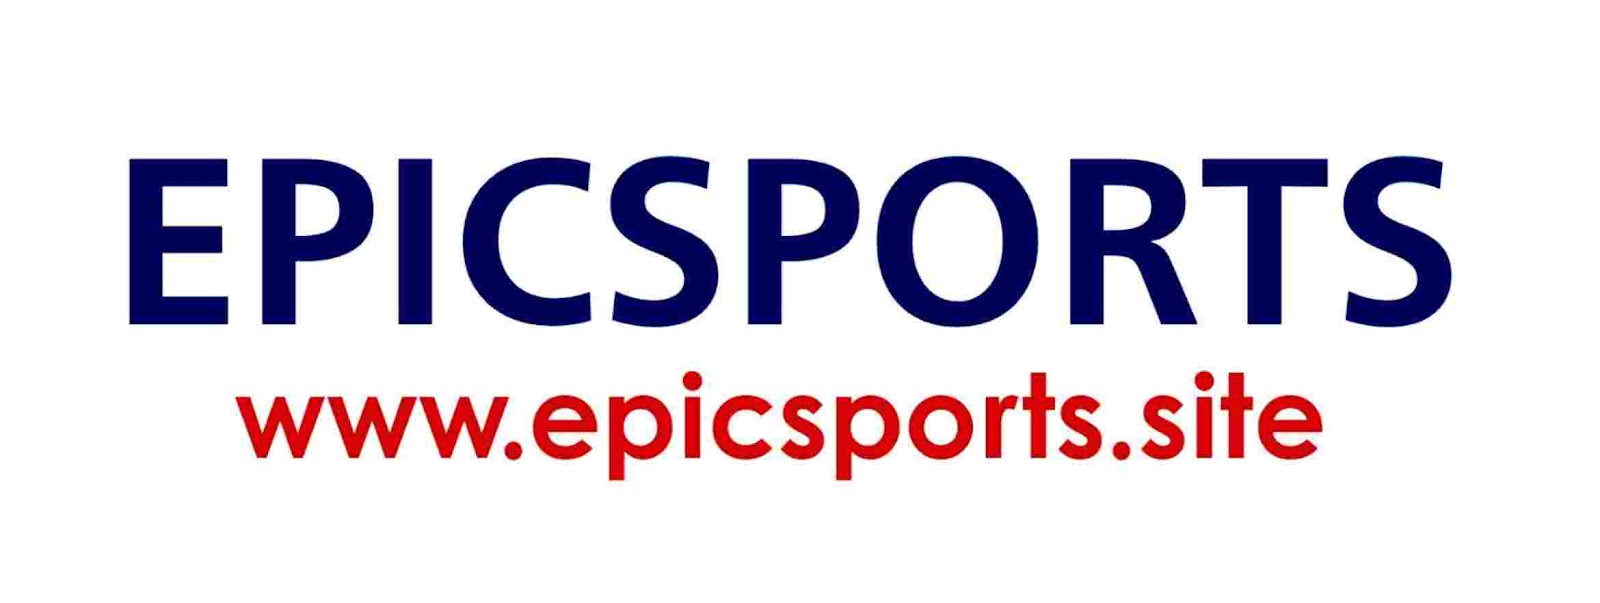 Epicsports.site